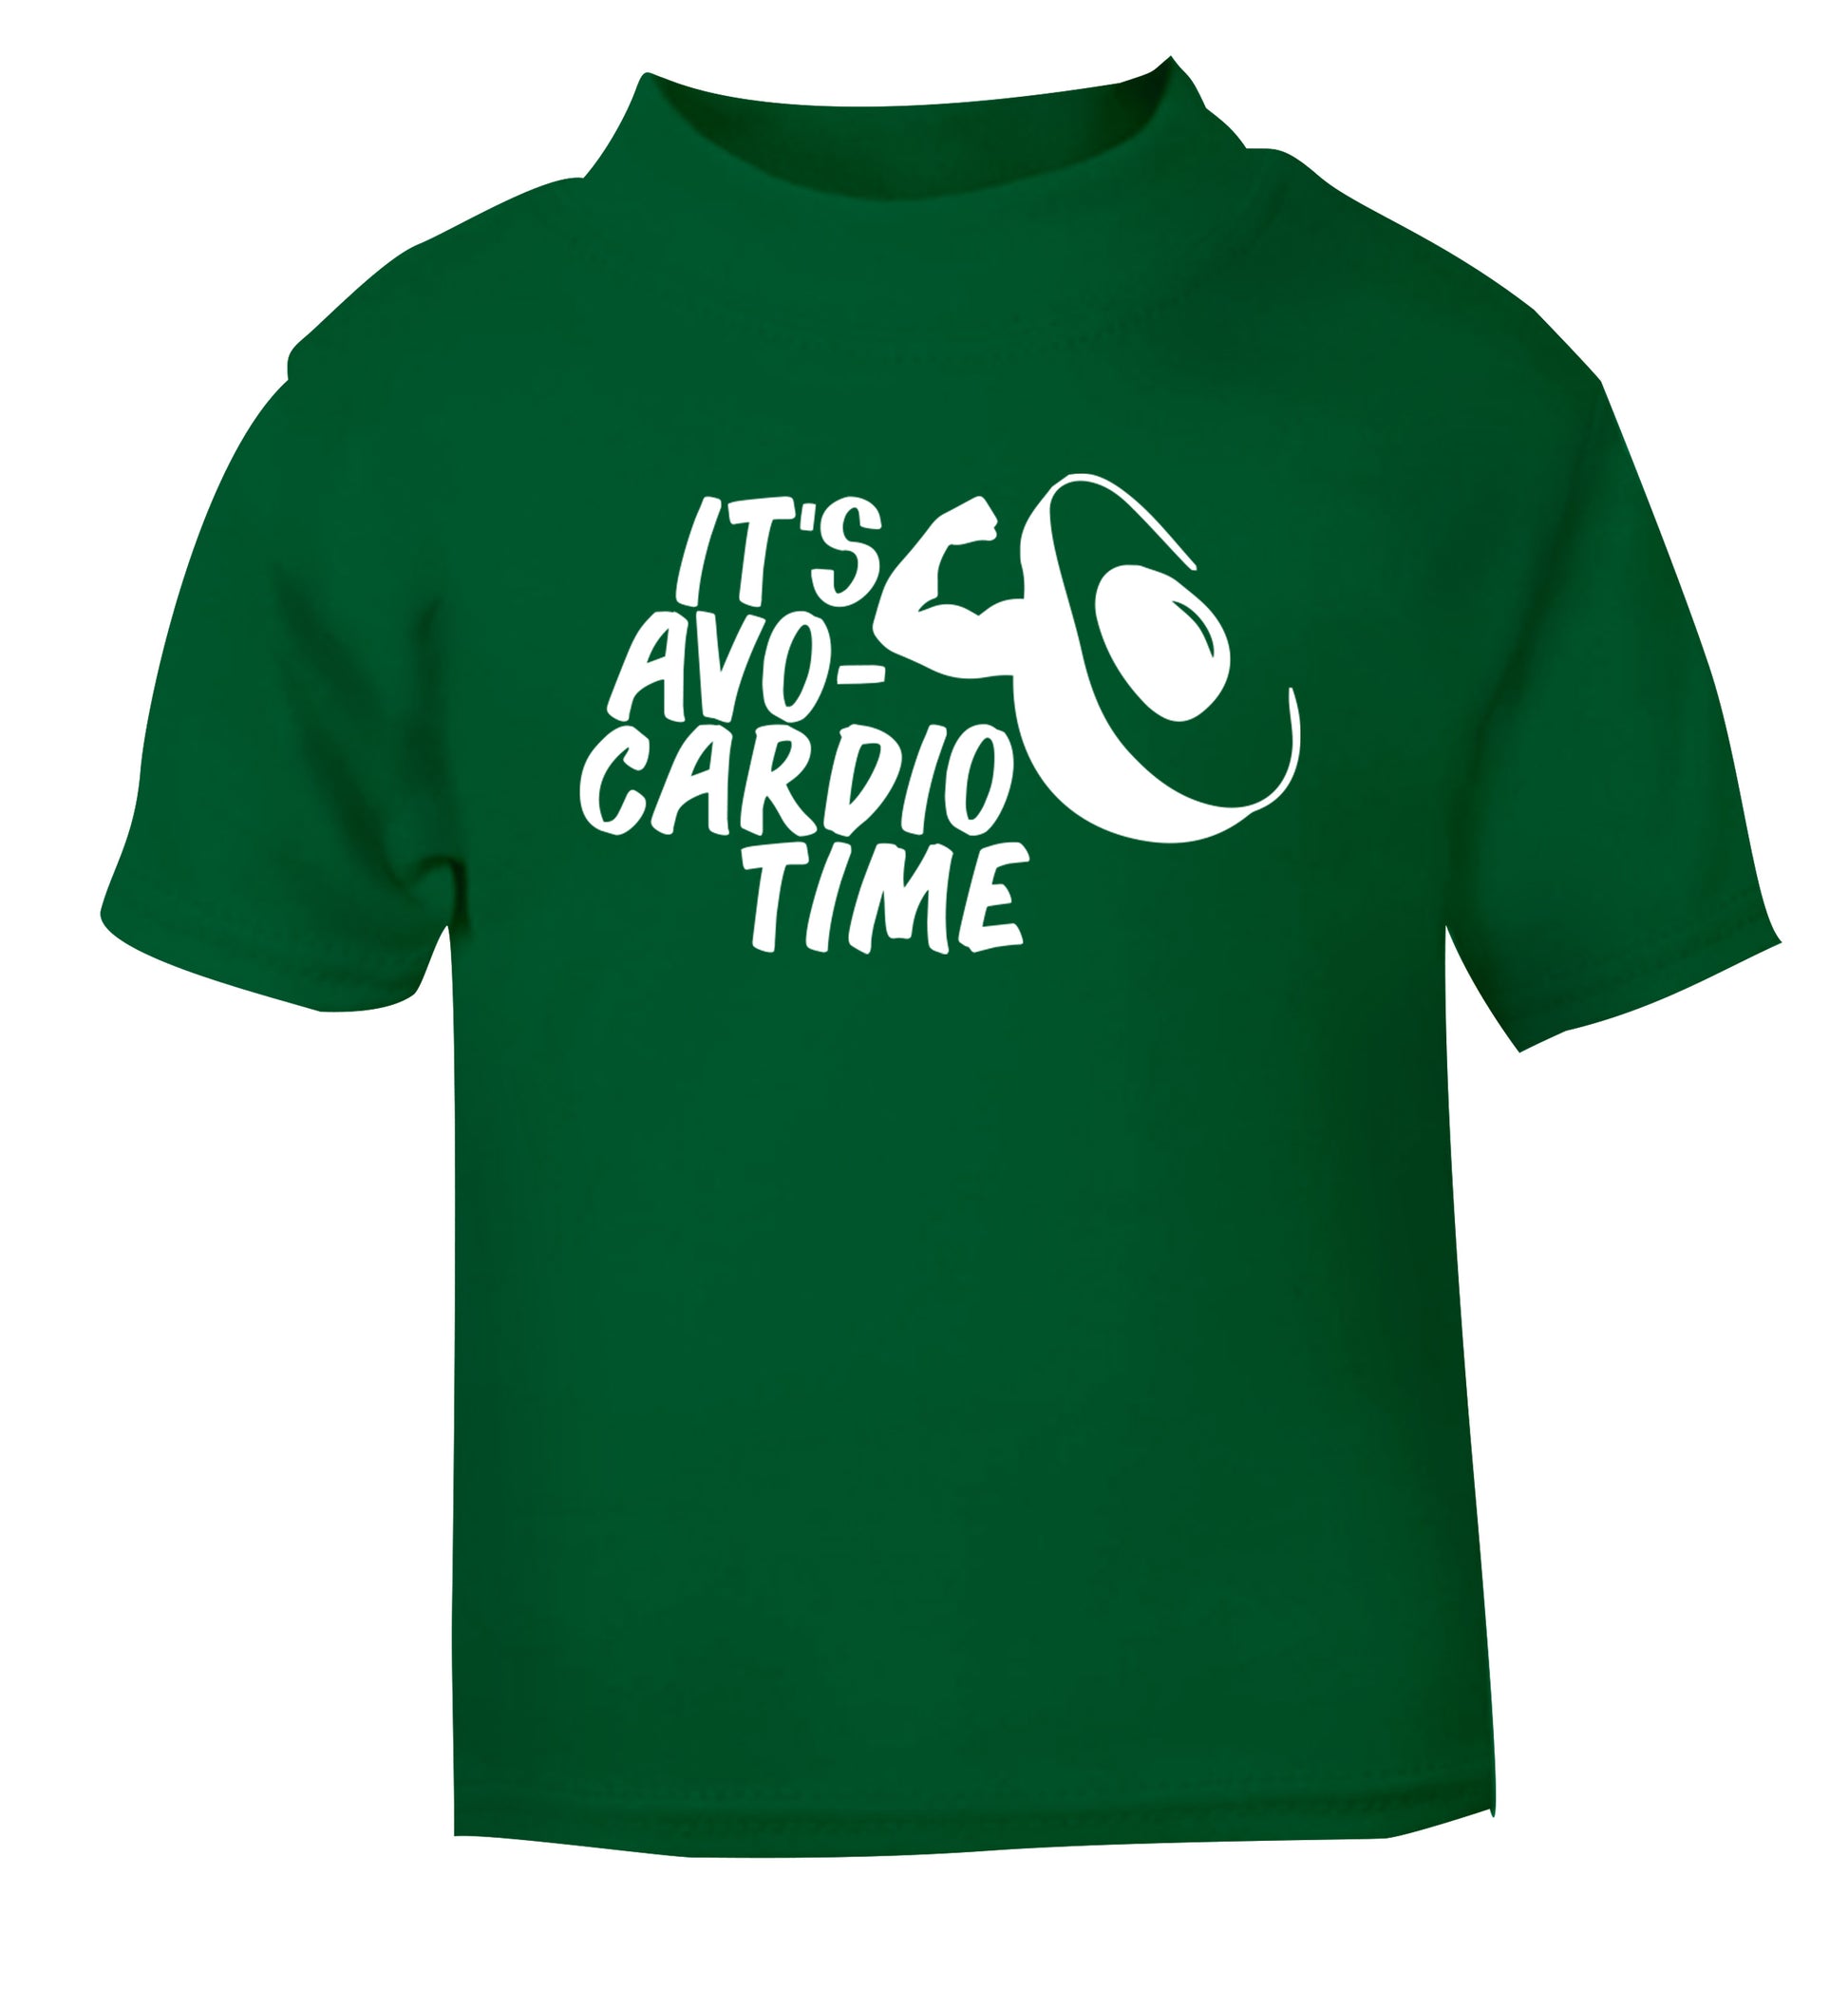 It's avo-cardio time green Baby Toddler Tshirt 2 Years